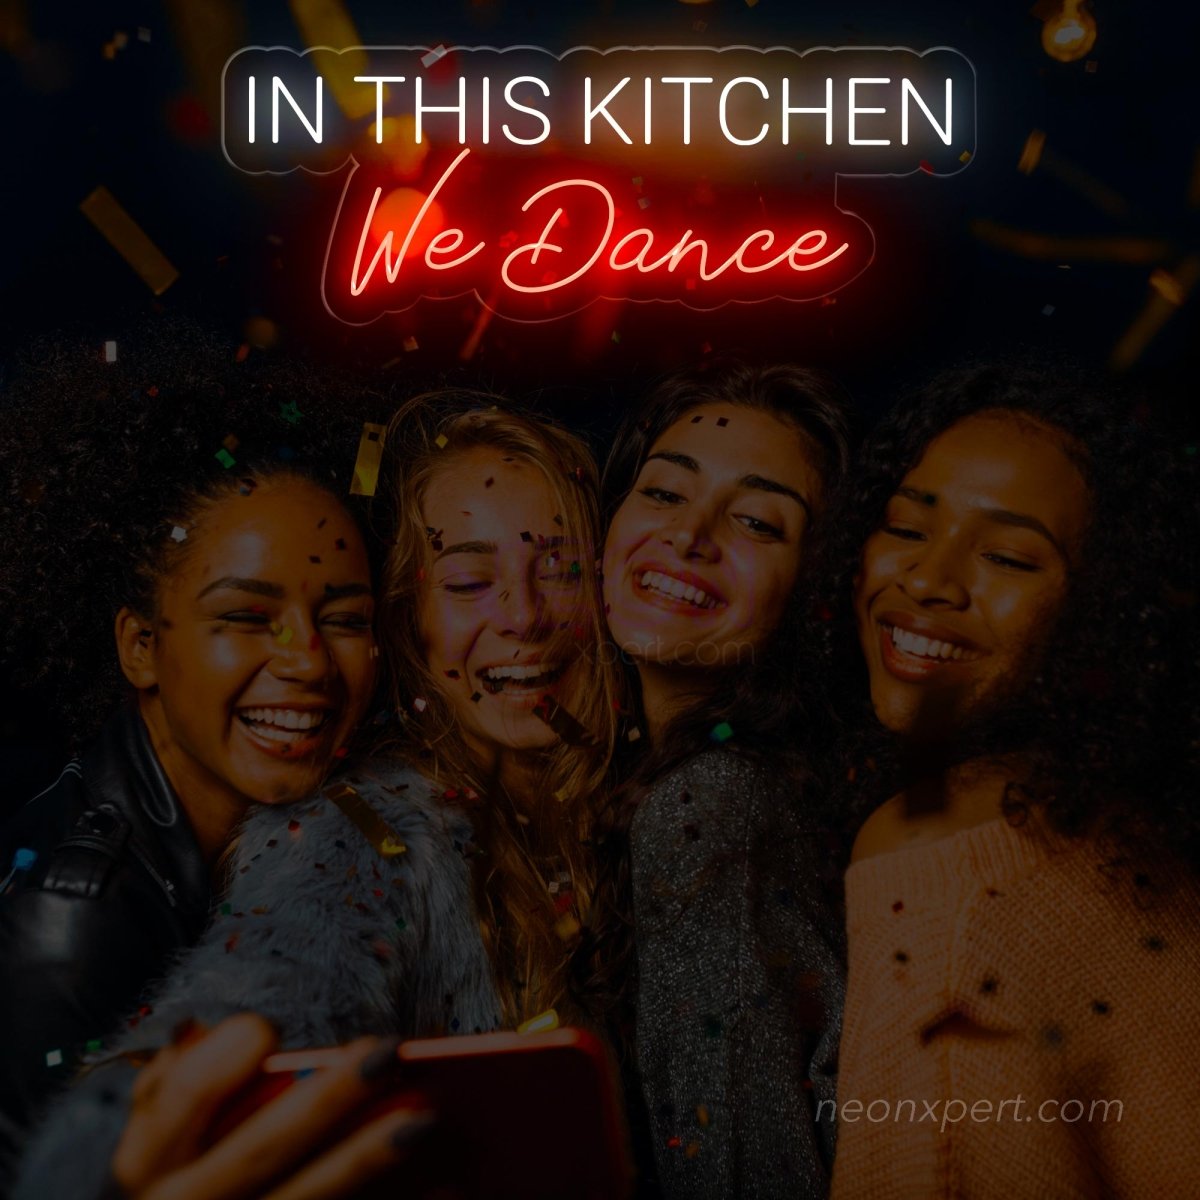 In This Kitchen We Dance Neon Sign - Heartwarming Kitchen Decor - NeonXpert